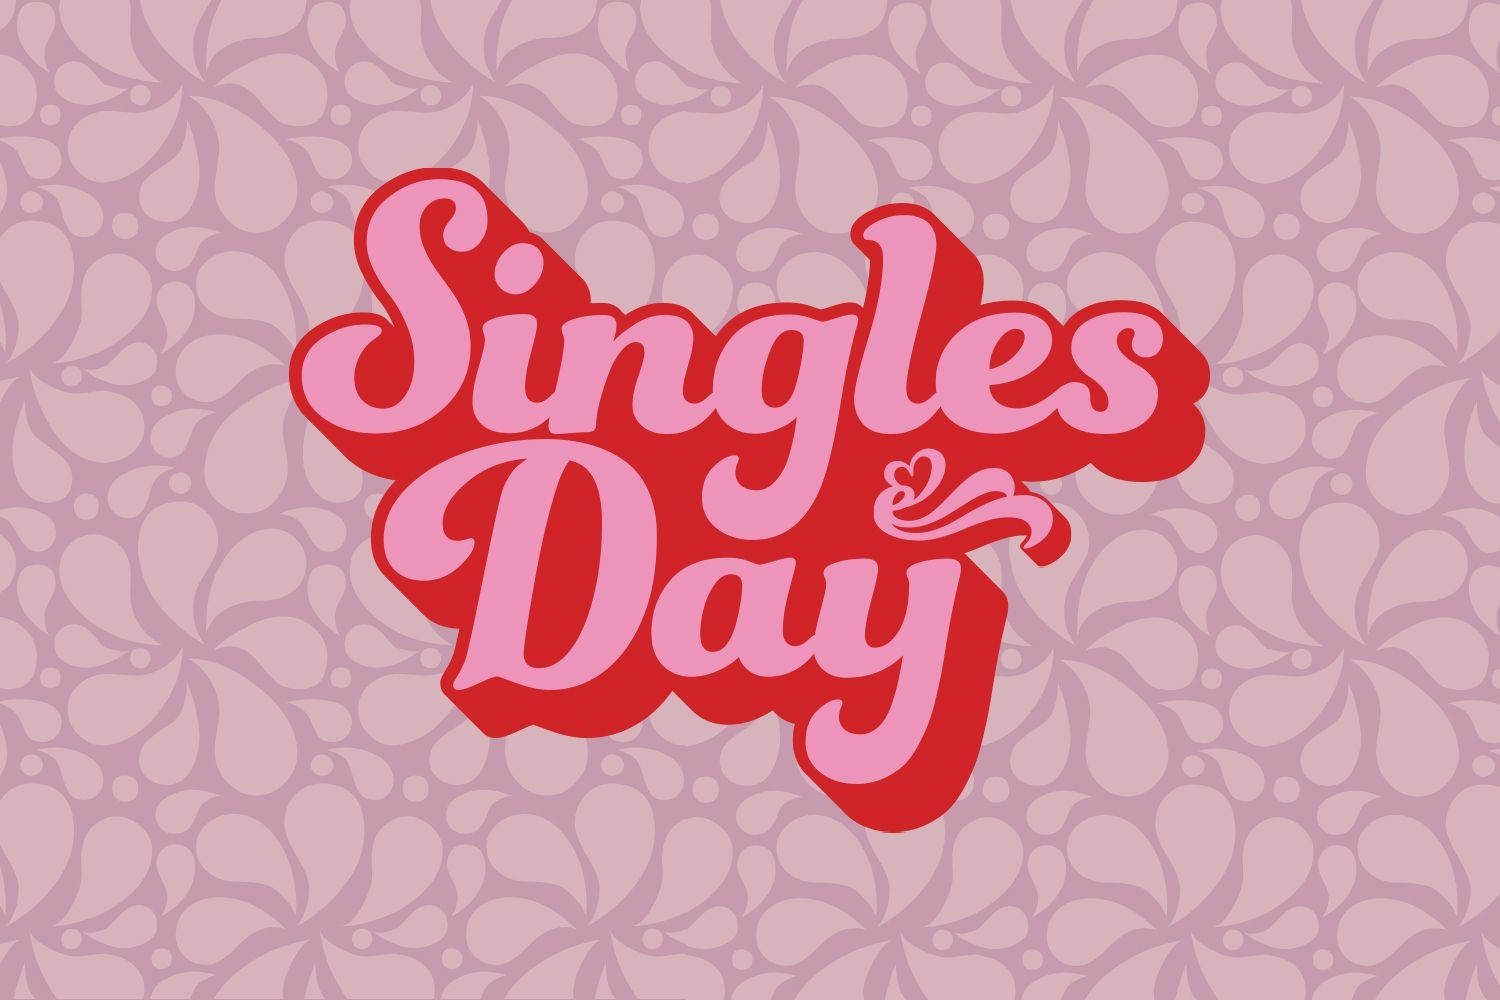 De Singles Day sale guide van Sneakerjagers